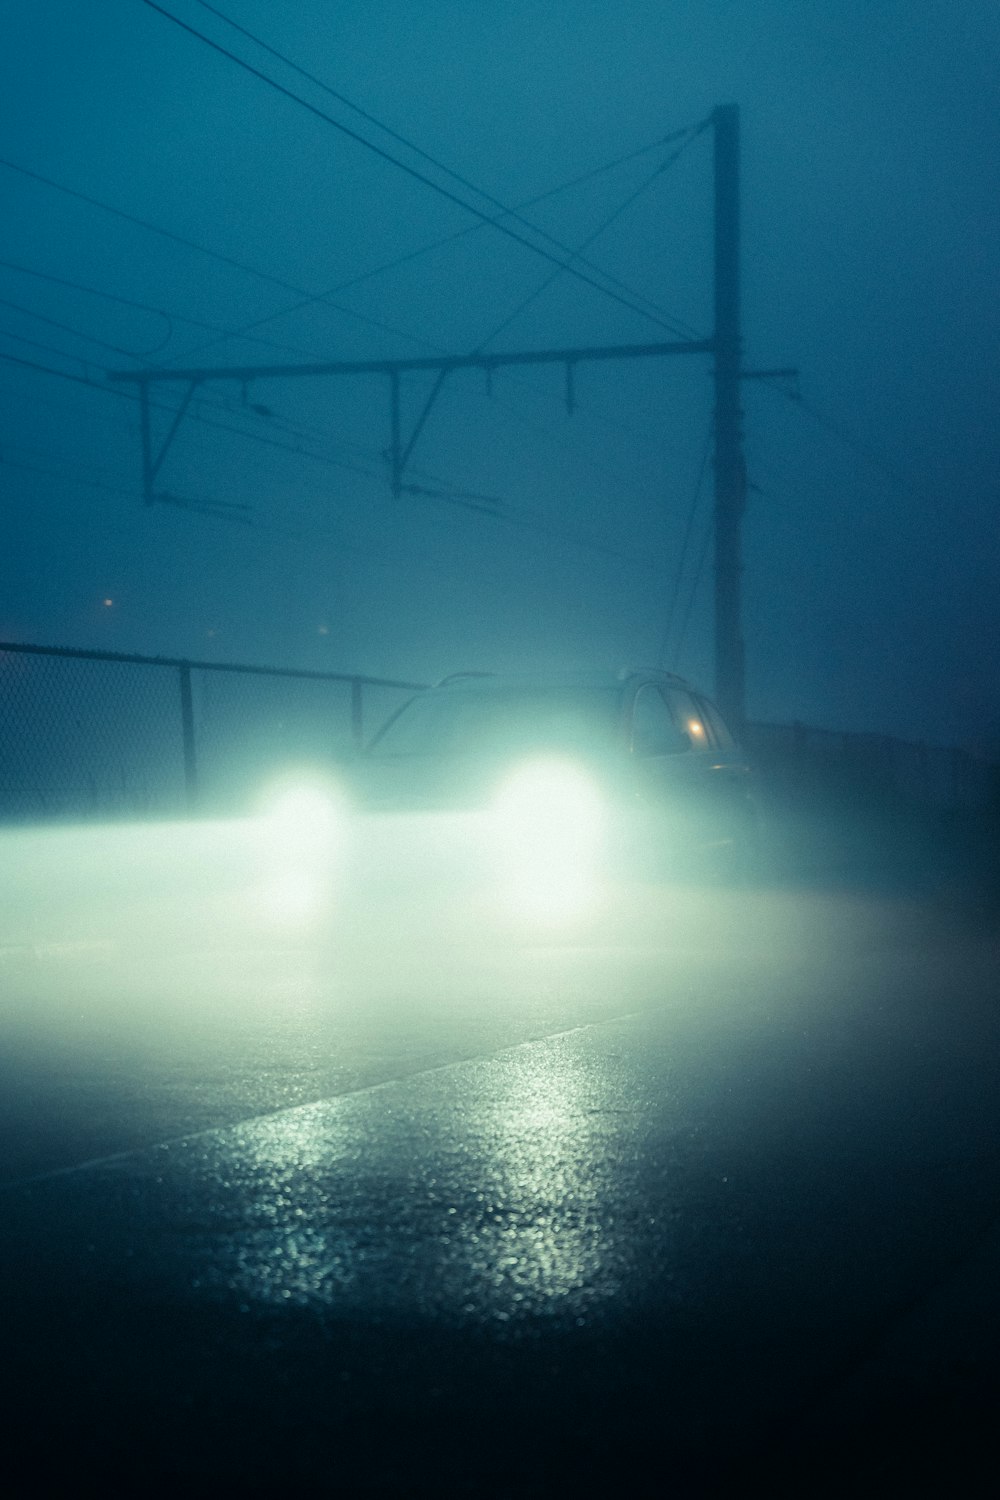 a car driving down a foggy road at night